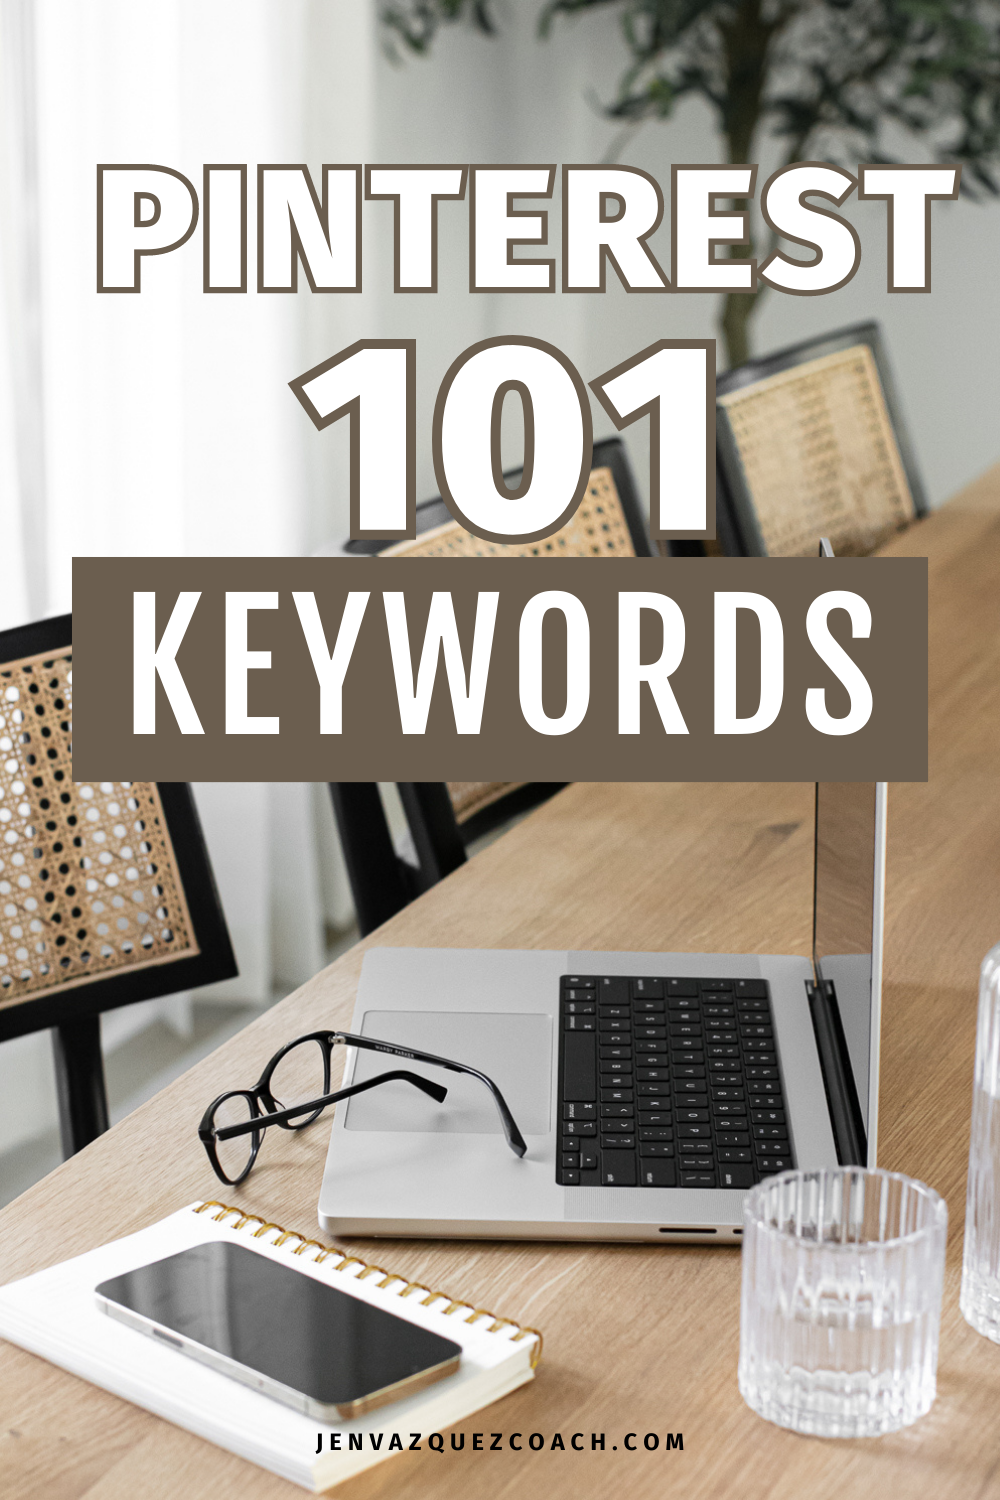 PinterestMarketing 101-Keywords by Jen Vazquez Media 